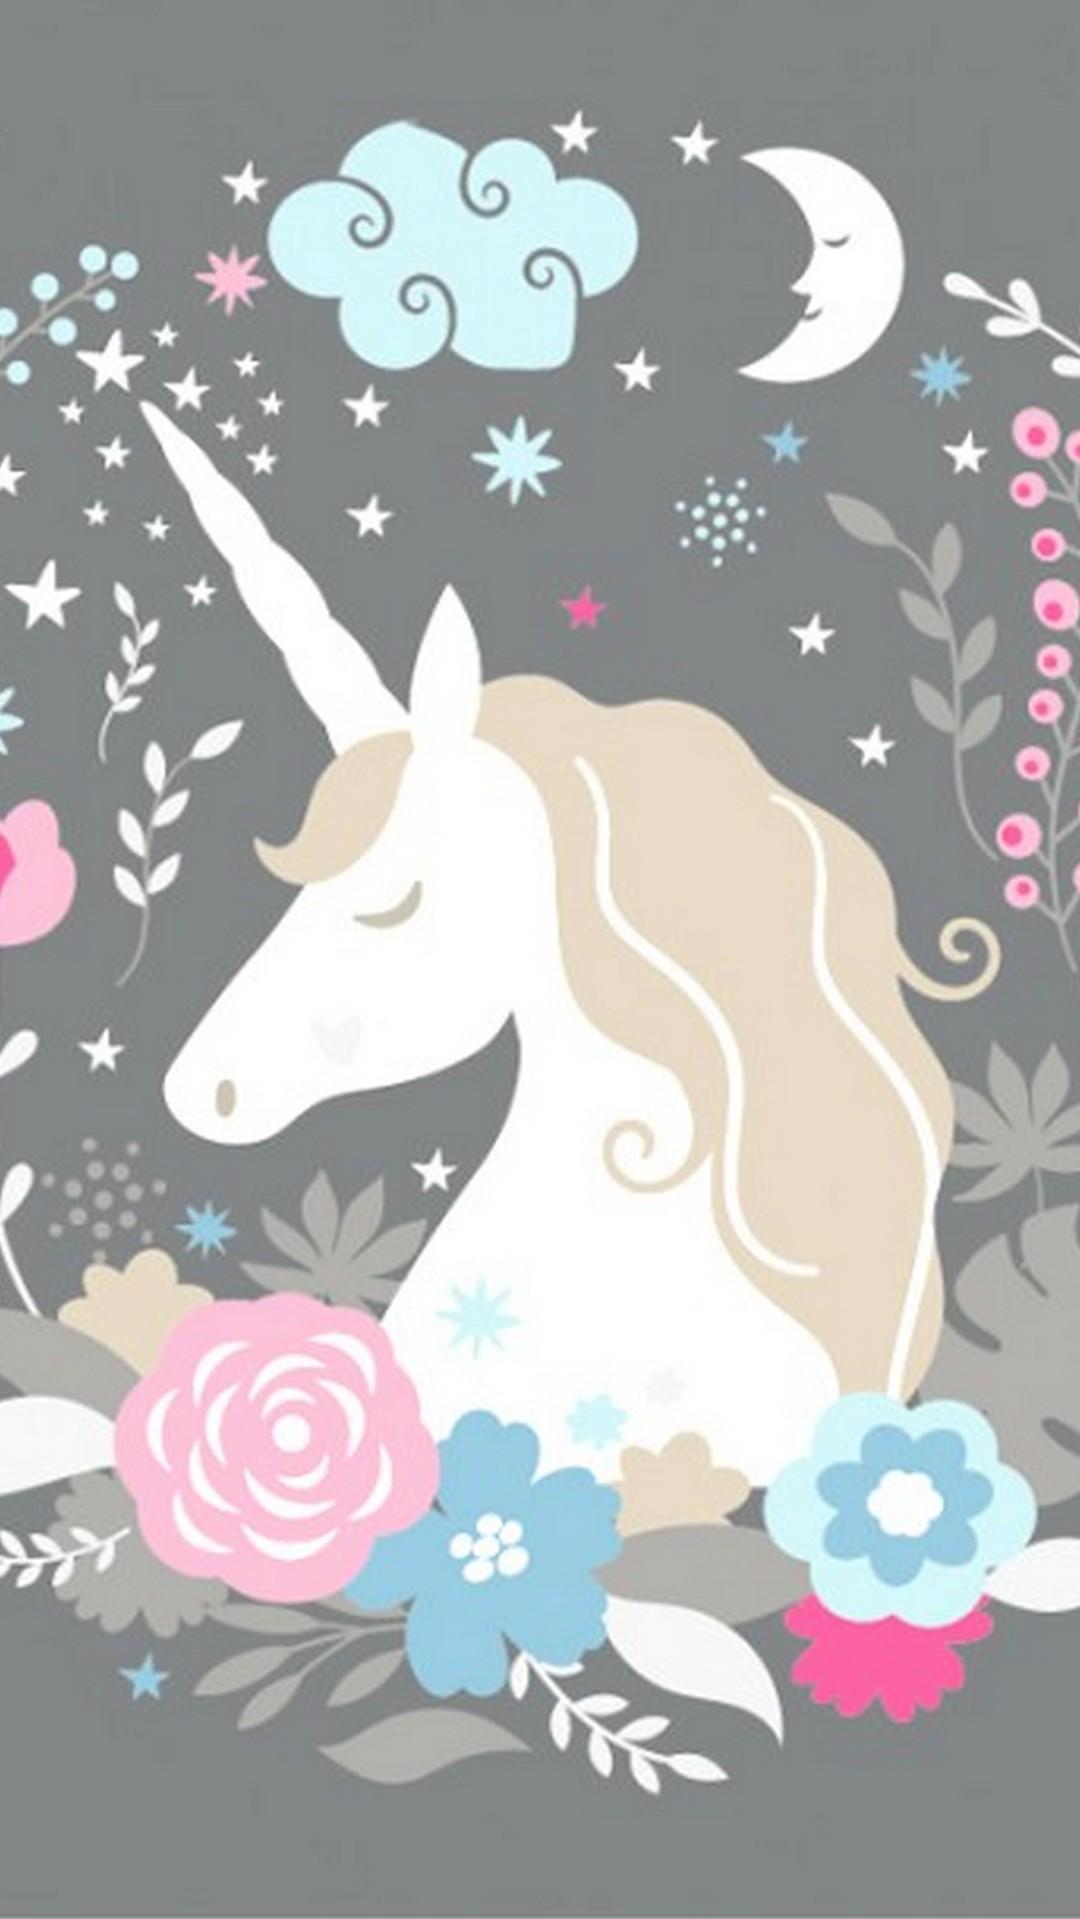 Cute Girly Unicorn iPhone Wallpaper 3d